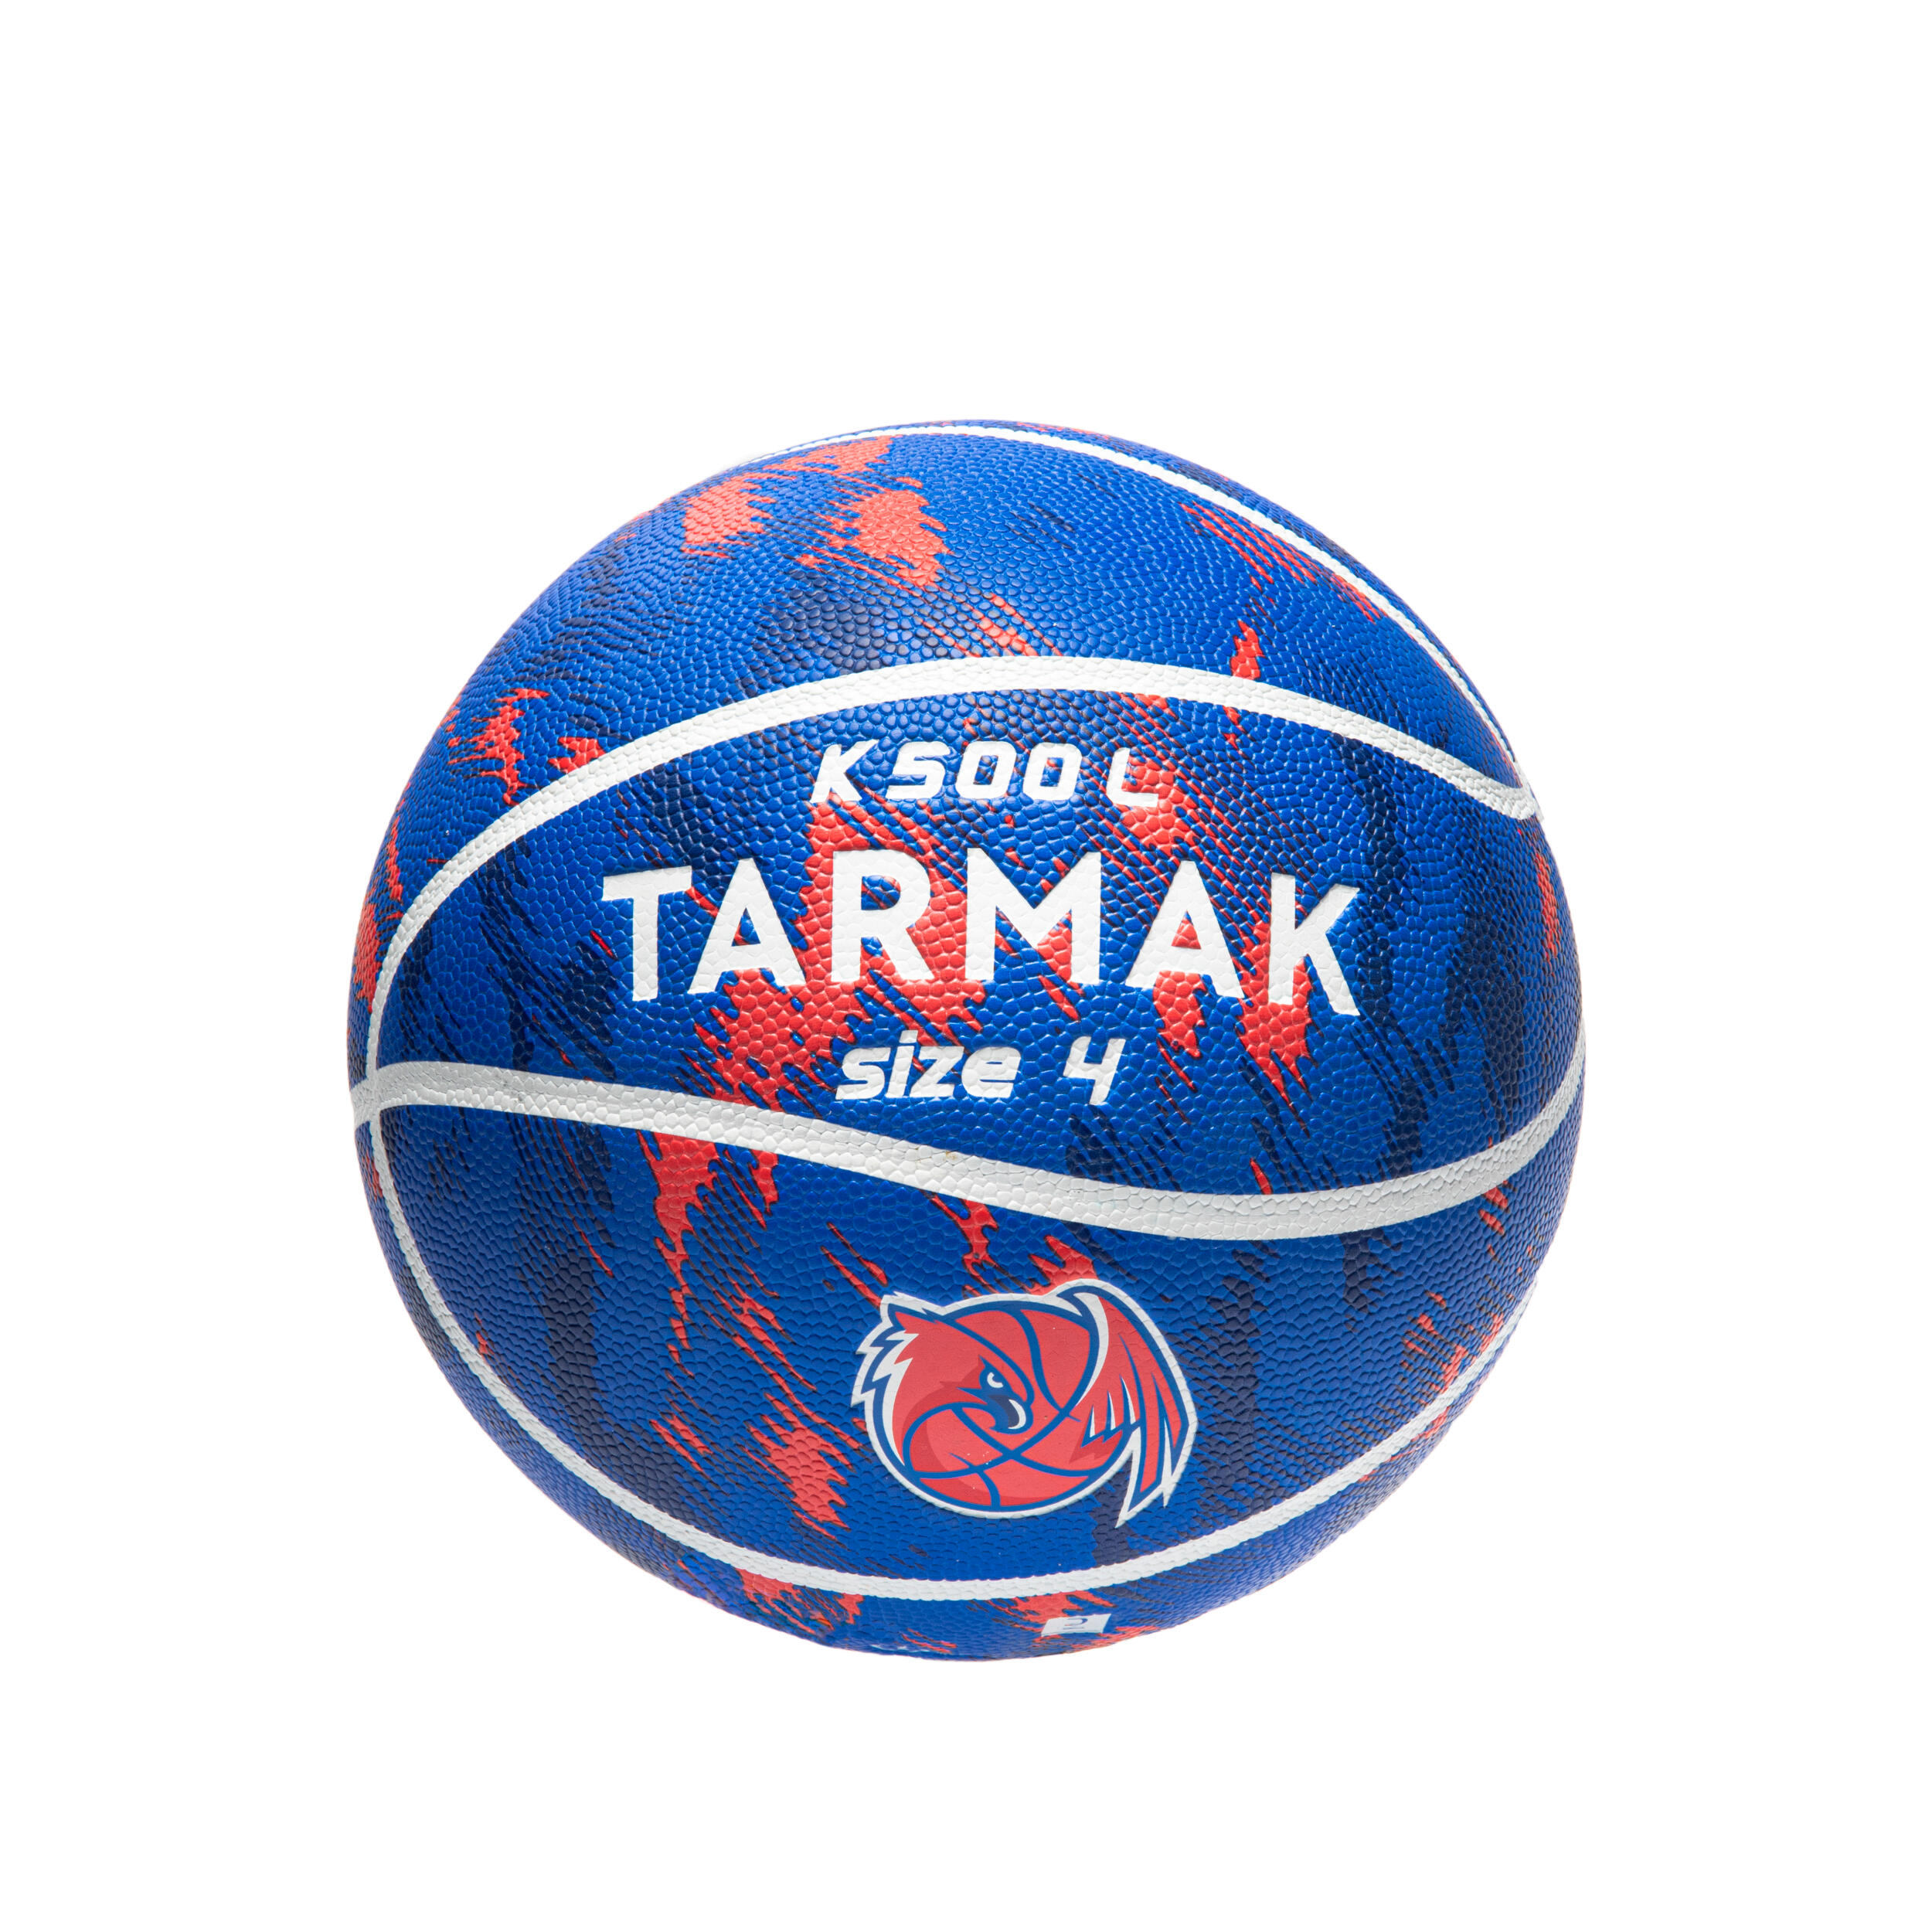 TARMAK Ballon De Basketball Taille 4 Enfant - K500 Bleu Orange